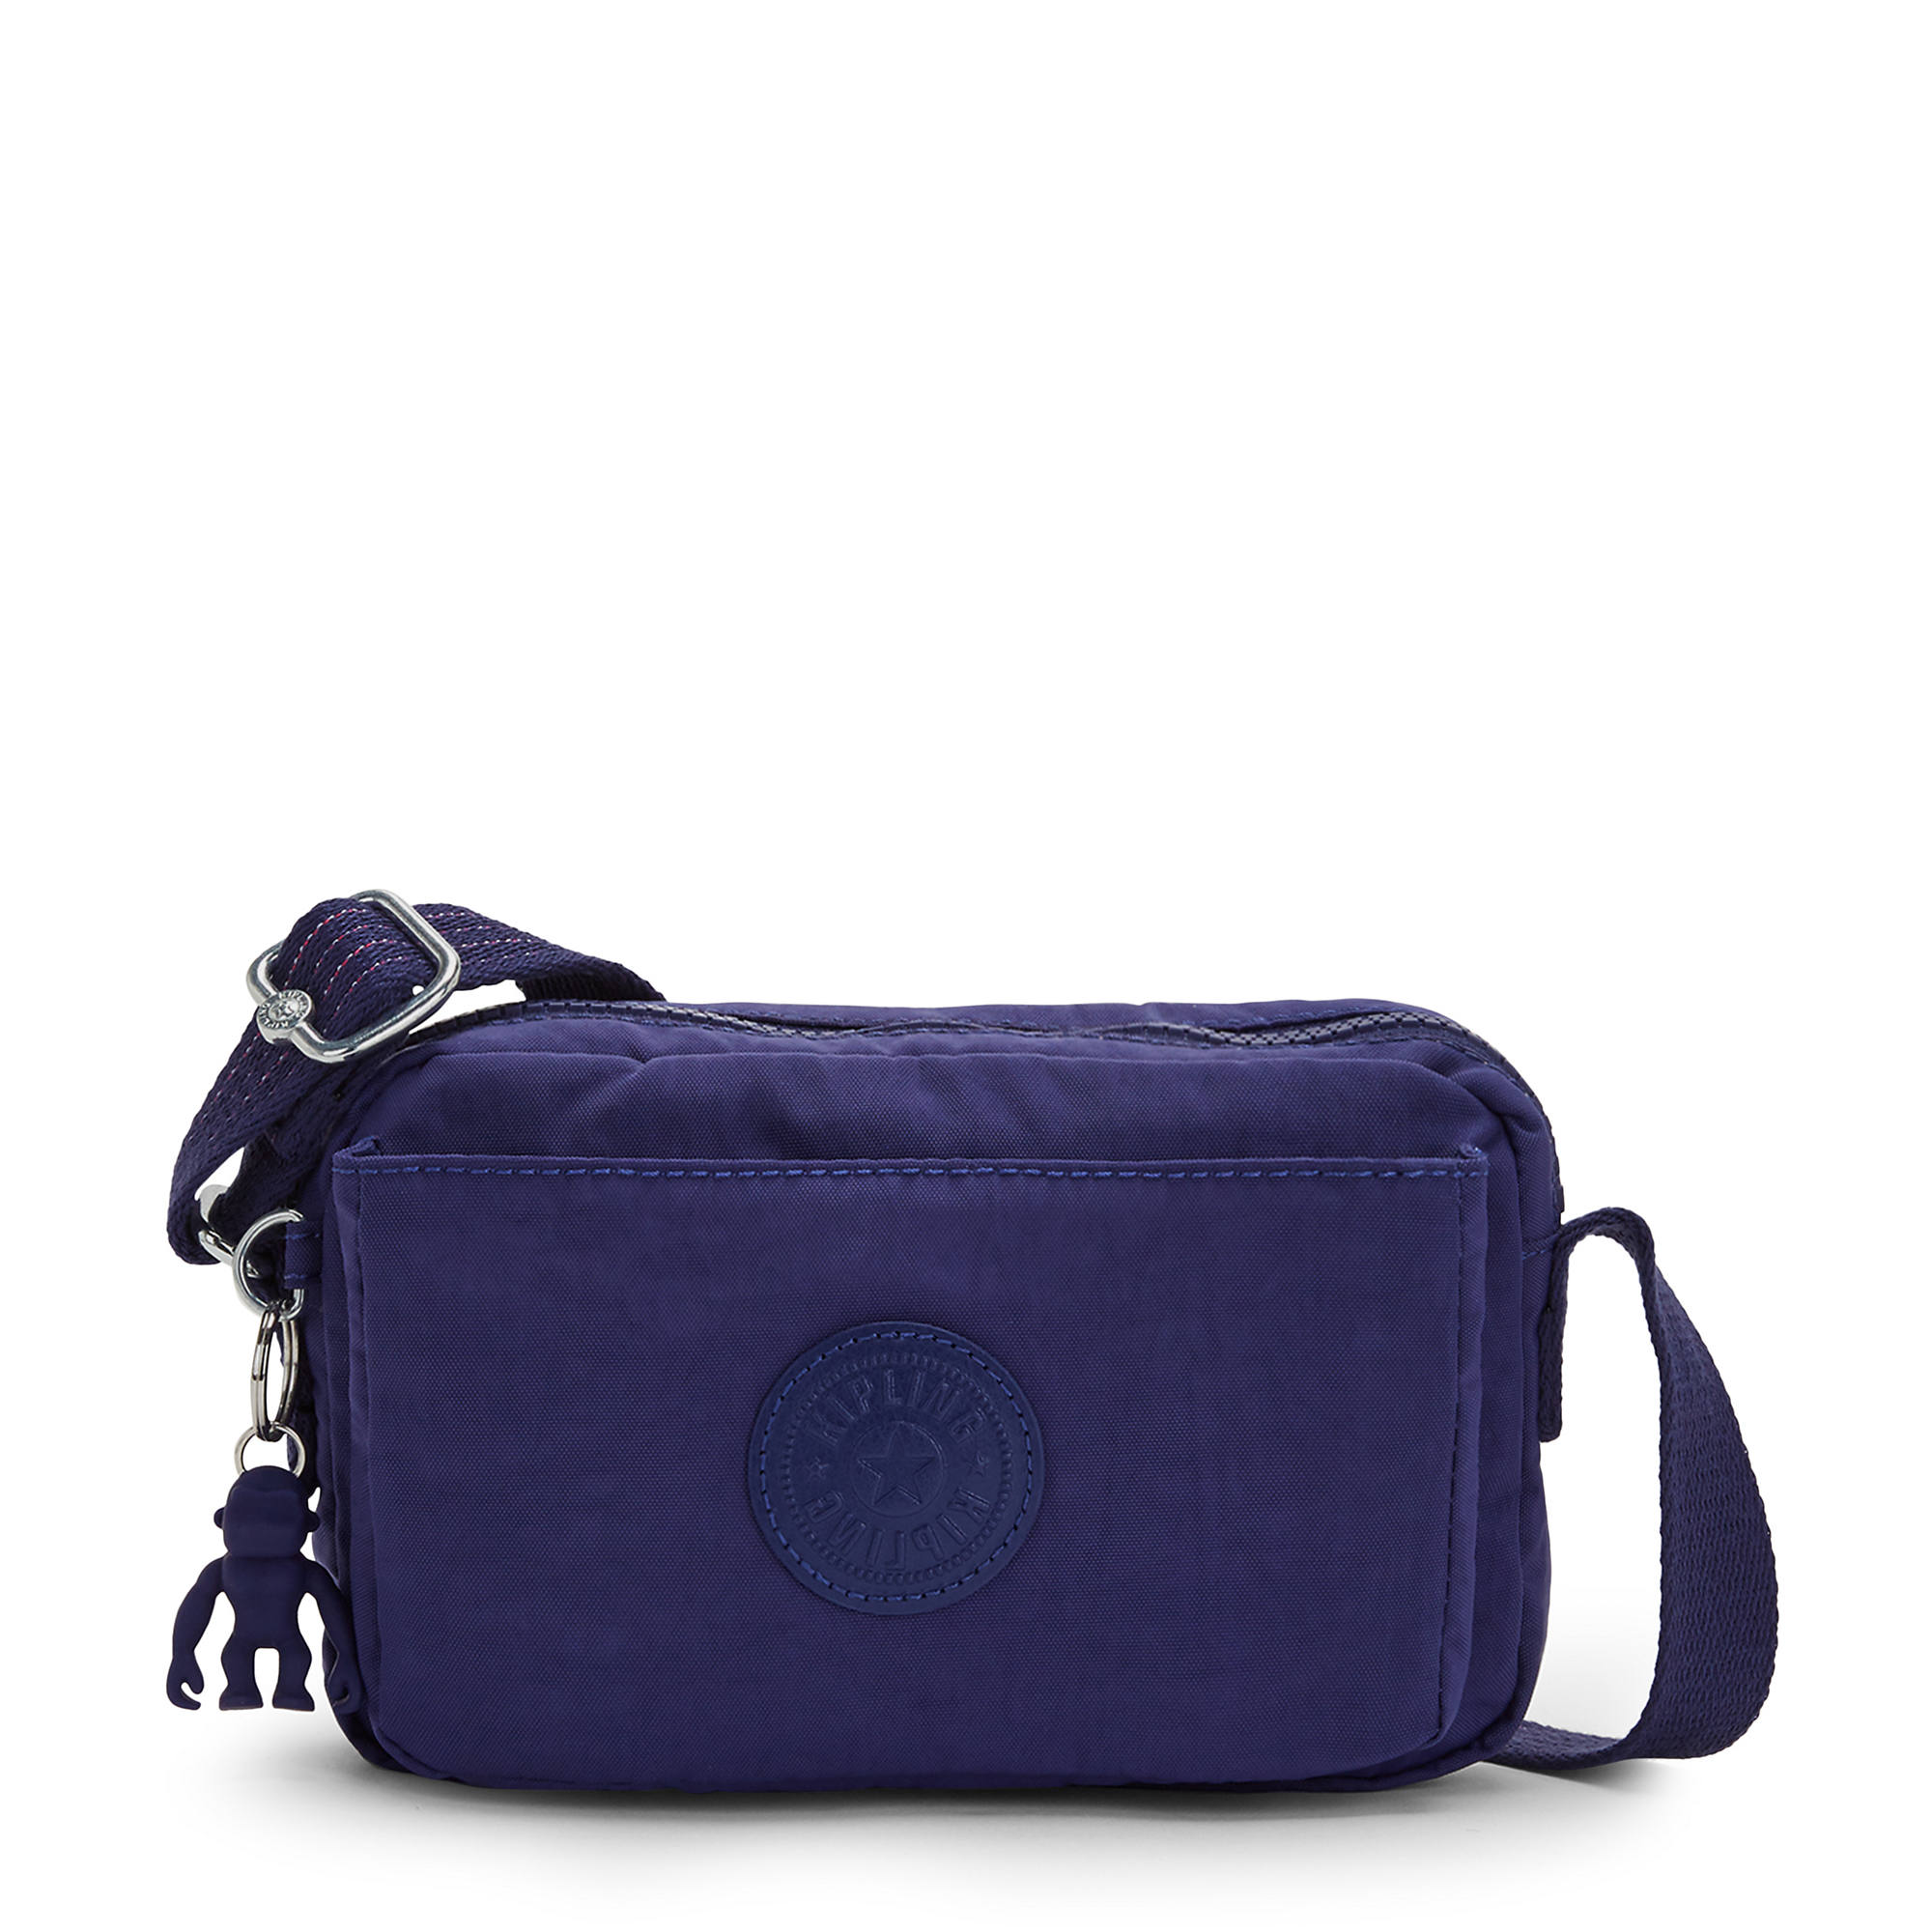 Abanu Medium Crossbody Bag, Galaxy Blue, large-zoomed